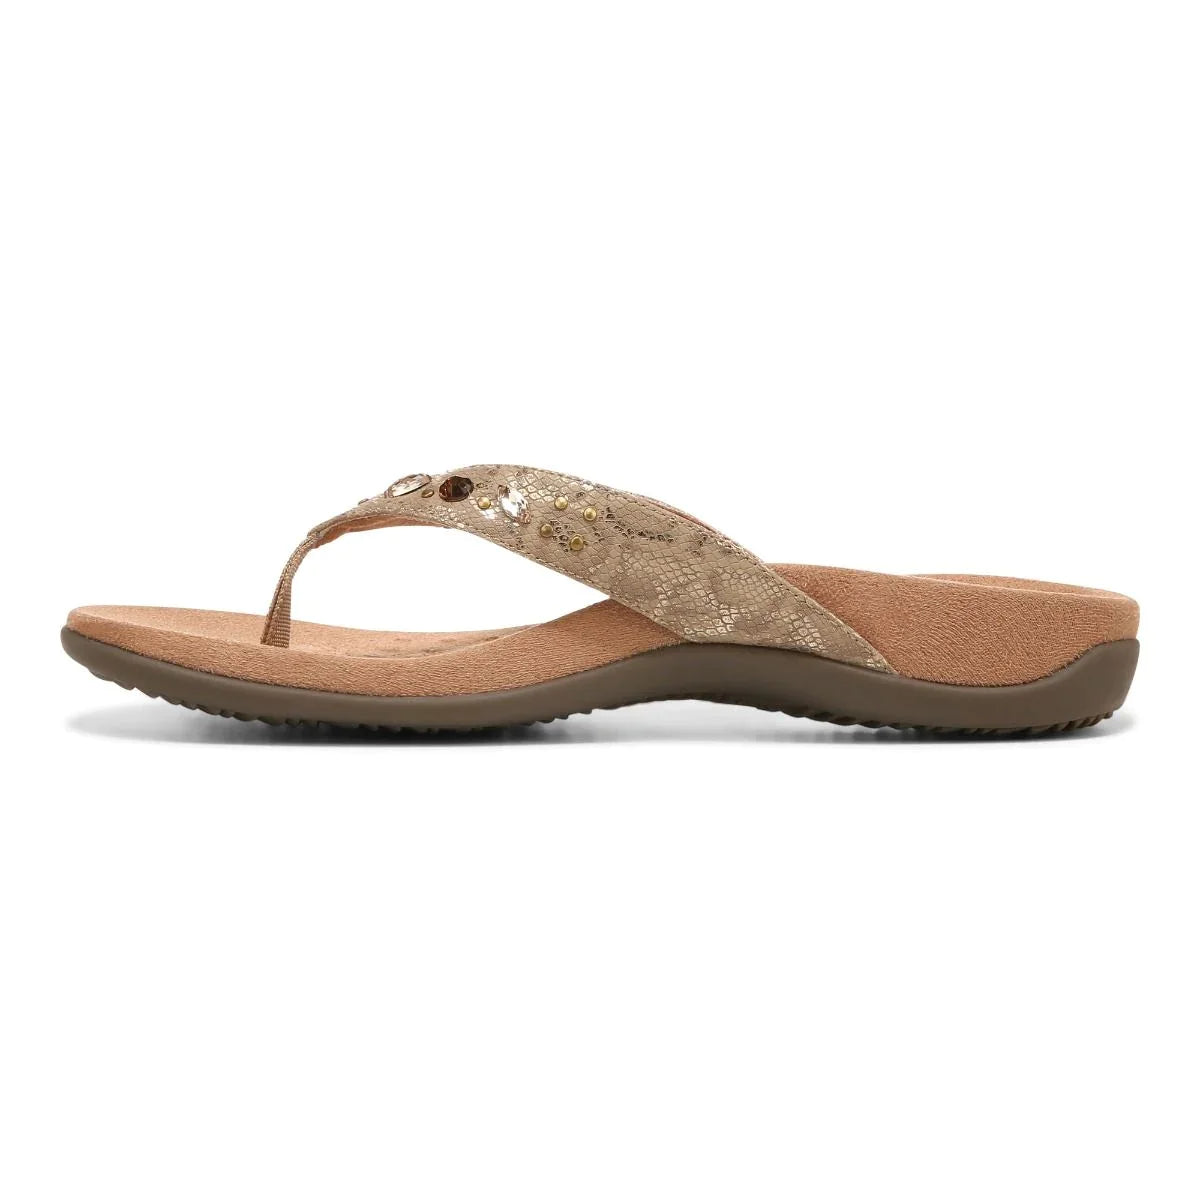 Women's Vionic Lucia Toe Post Sandal Color: Wheat Snake